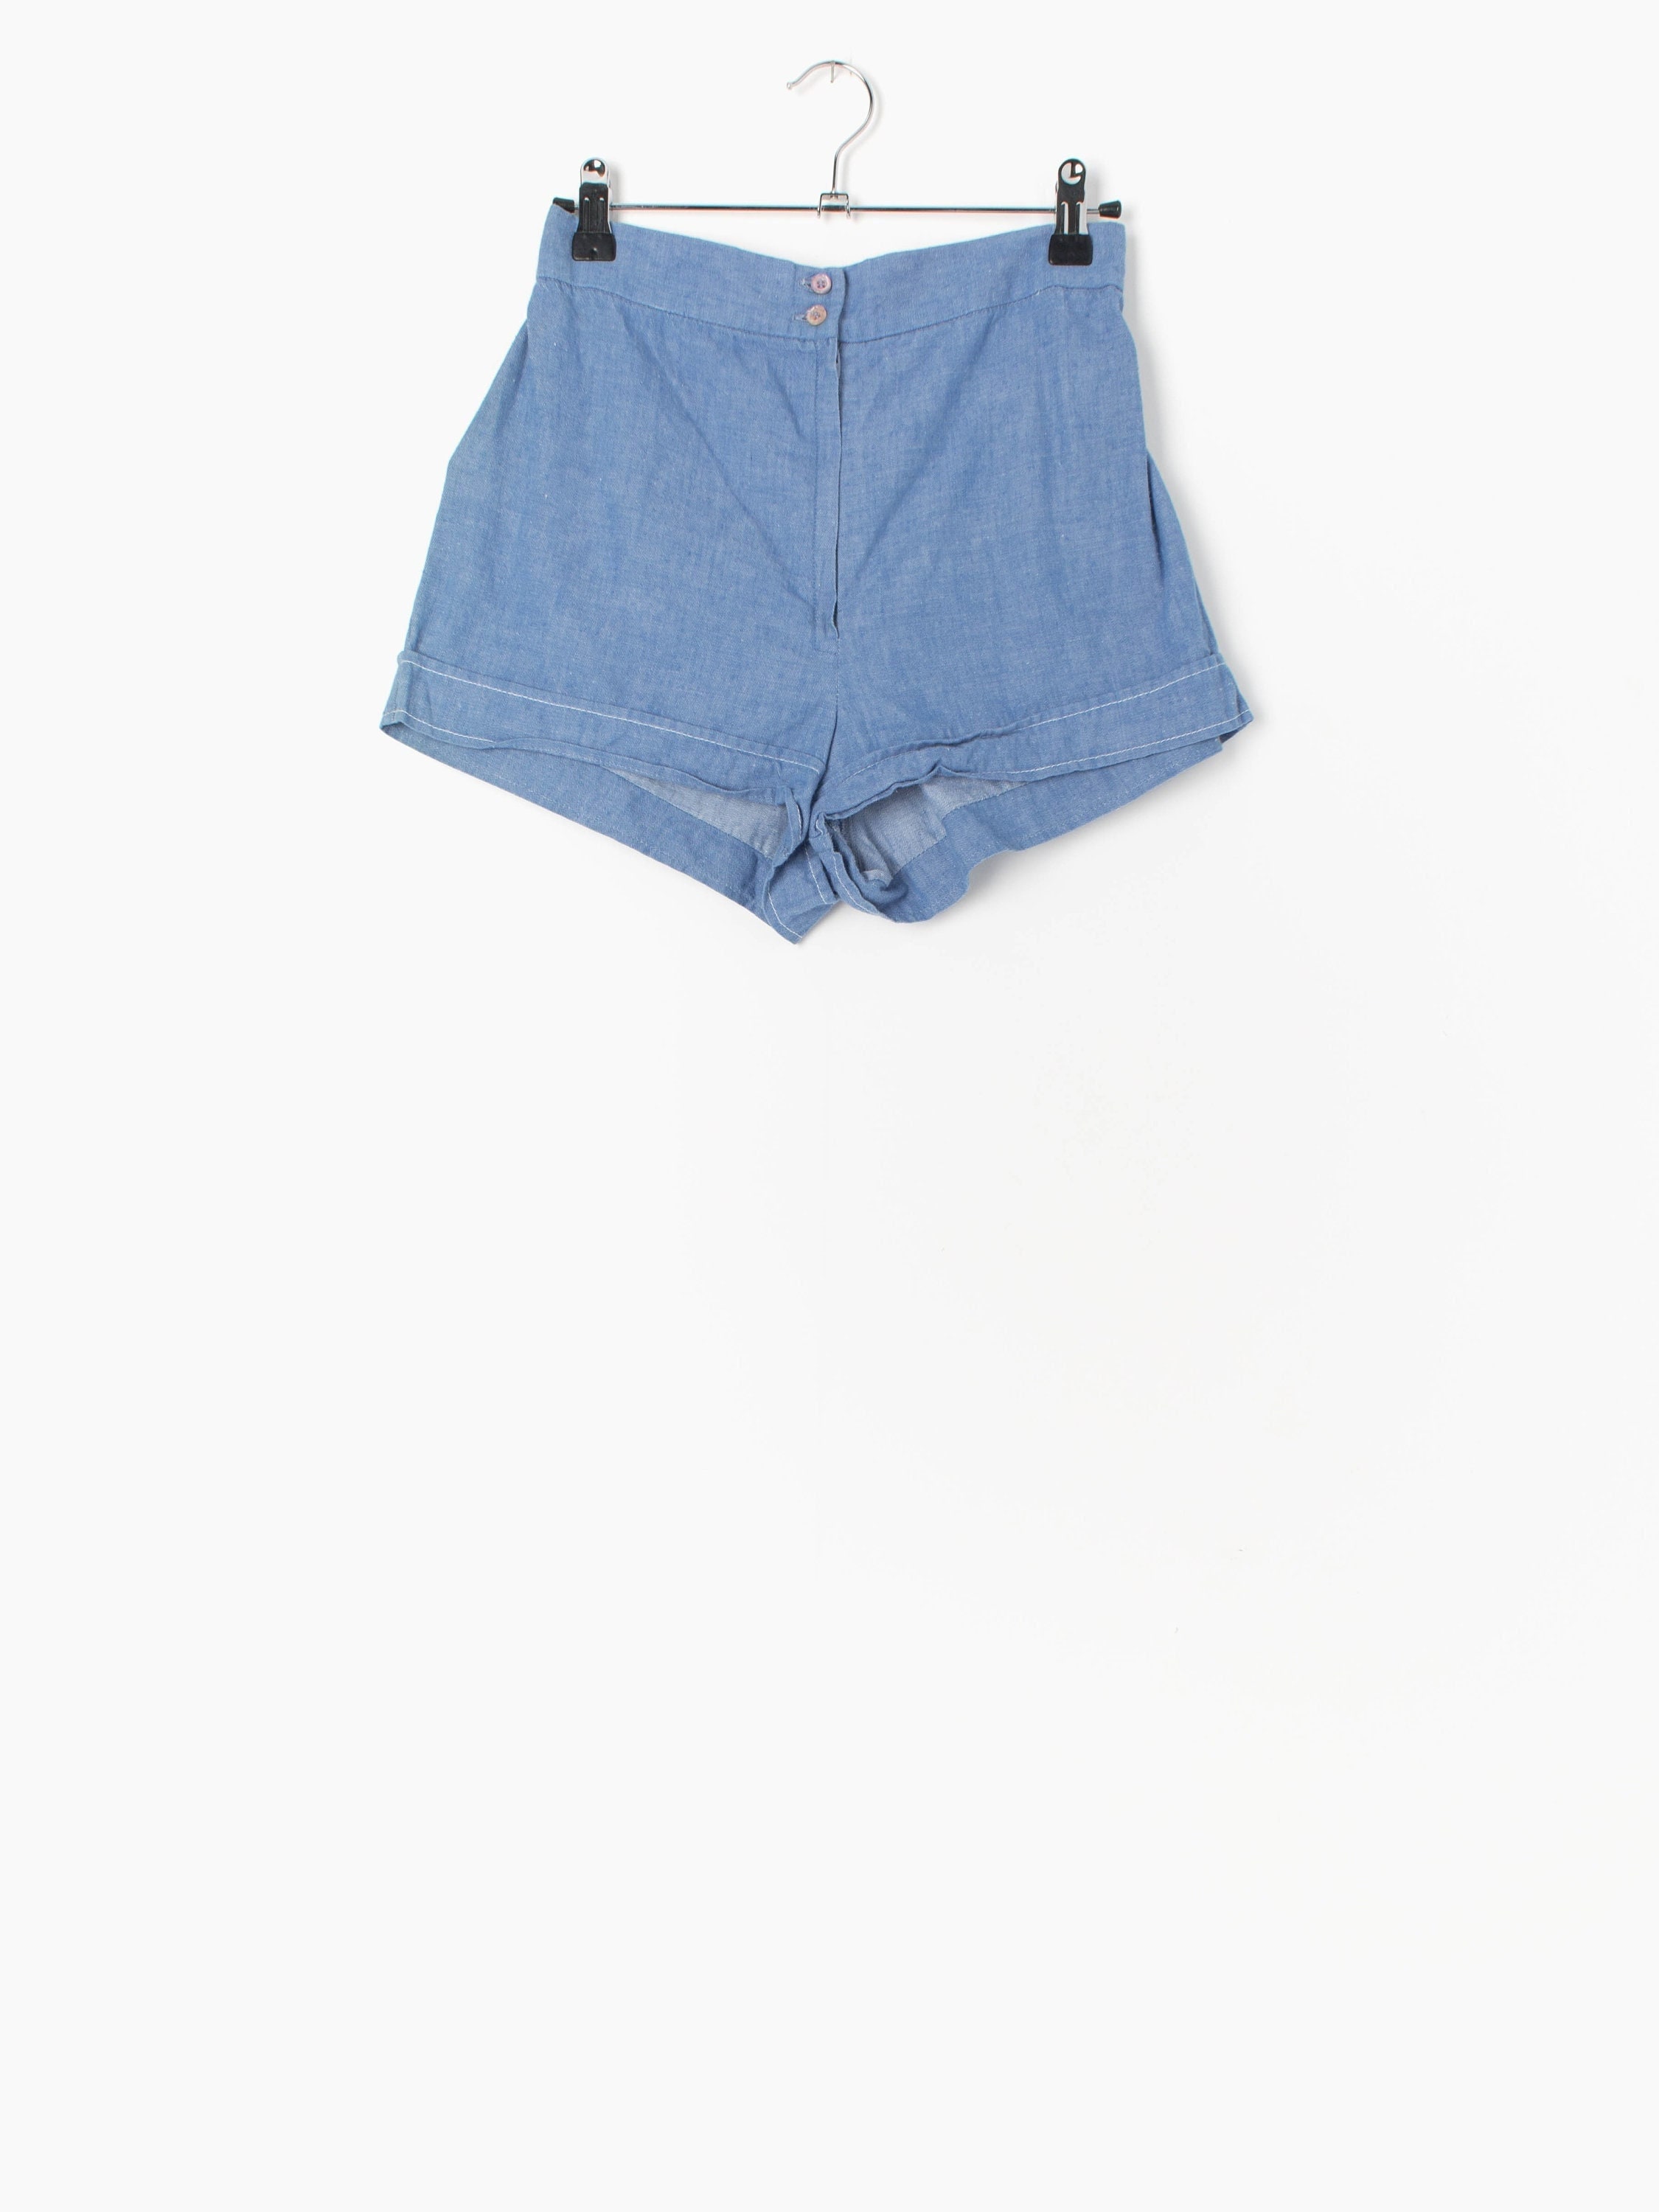 Buy Stretchable Denim Short Pant for Women online  Looksgudin